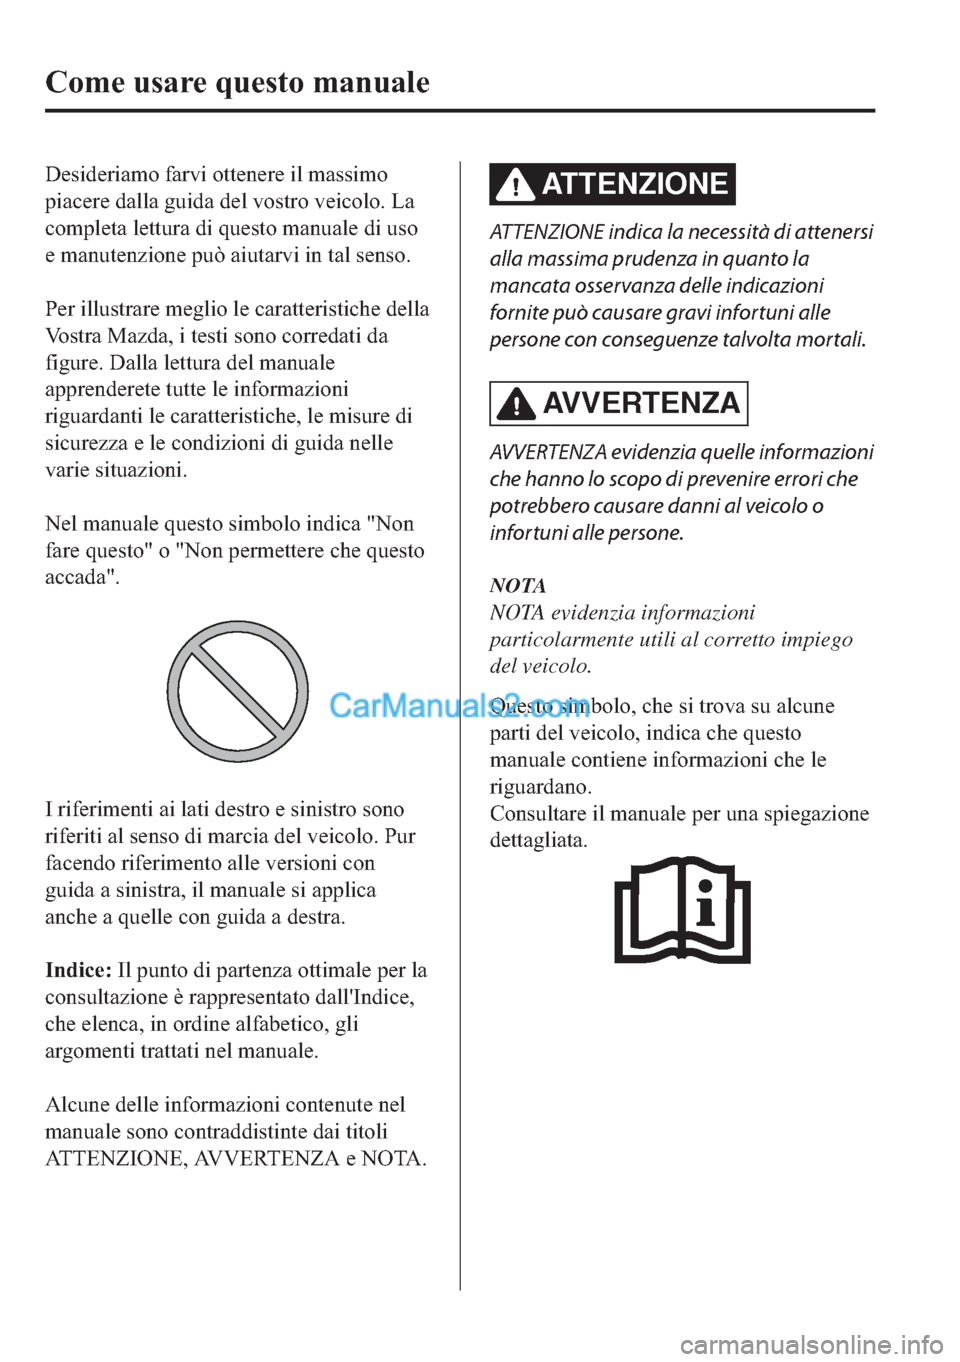 MAZDA MODEL 2 2019  Manuale del proprietario (in Italian) ��H�V�L�G�H�U�L�D�P�R��I�D�U�Y�L��R�W�W�H�Q�H�U�H��L�O��P�D�V�V�L�P�R
�S�L�D�F�H�U�H��G�D�O�O�D��J�X�L�G�D��G�H�O��Y�R�V�W�U�R��Y�H�L�F�R�O�R���/�D
�F�R�P�S�O�H�W�D��O�H�W�W�X�U�D��G�L�